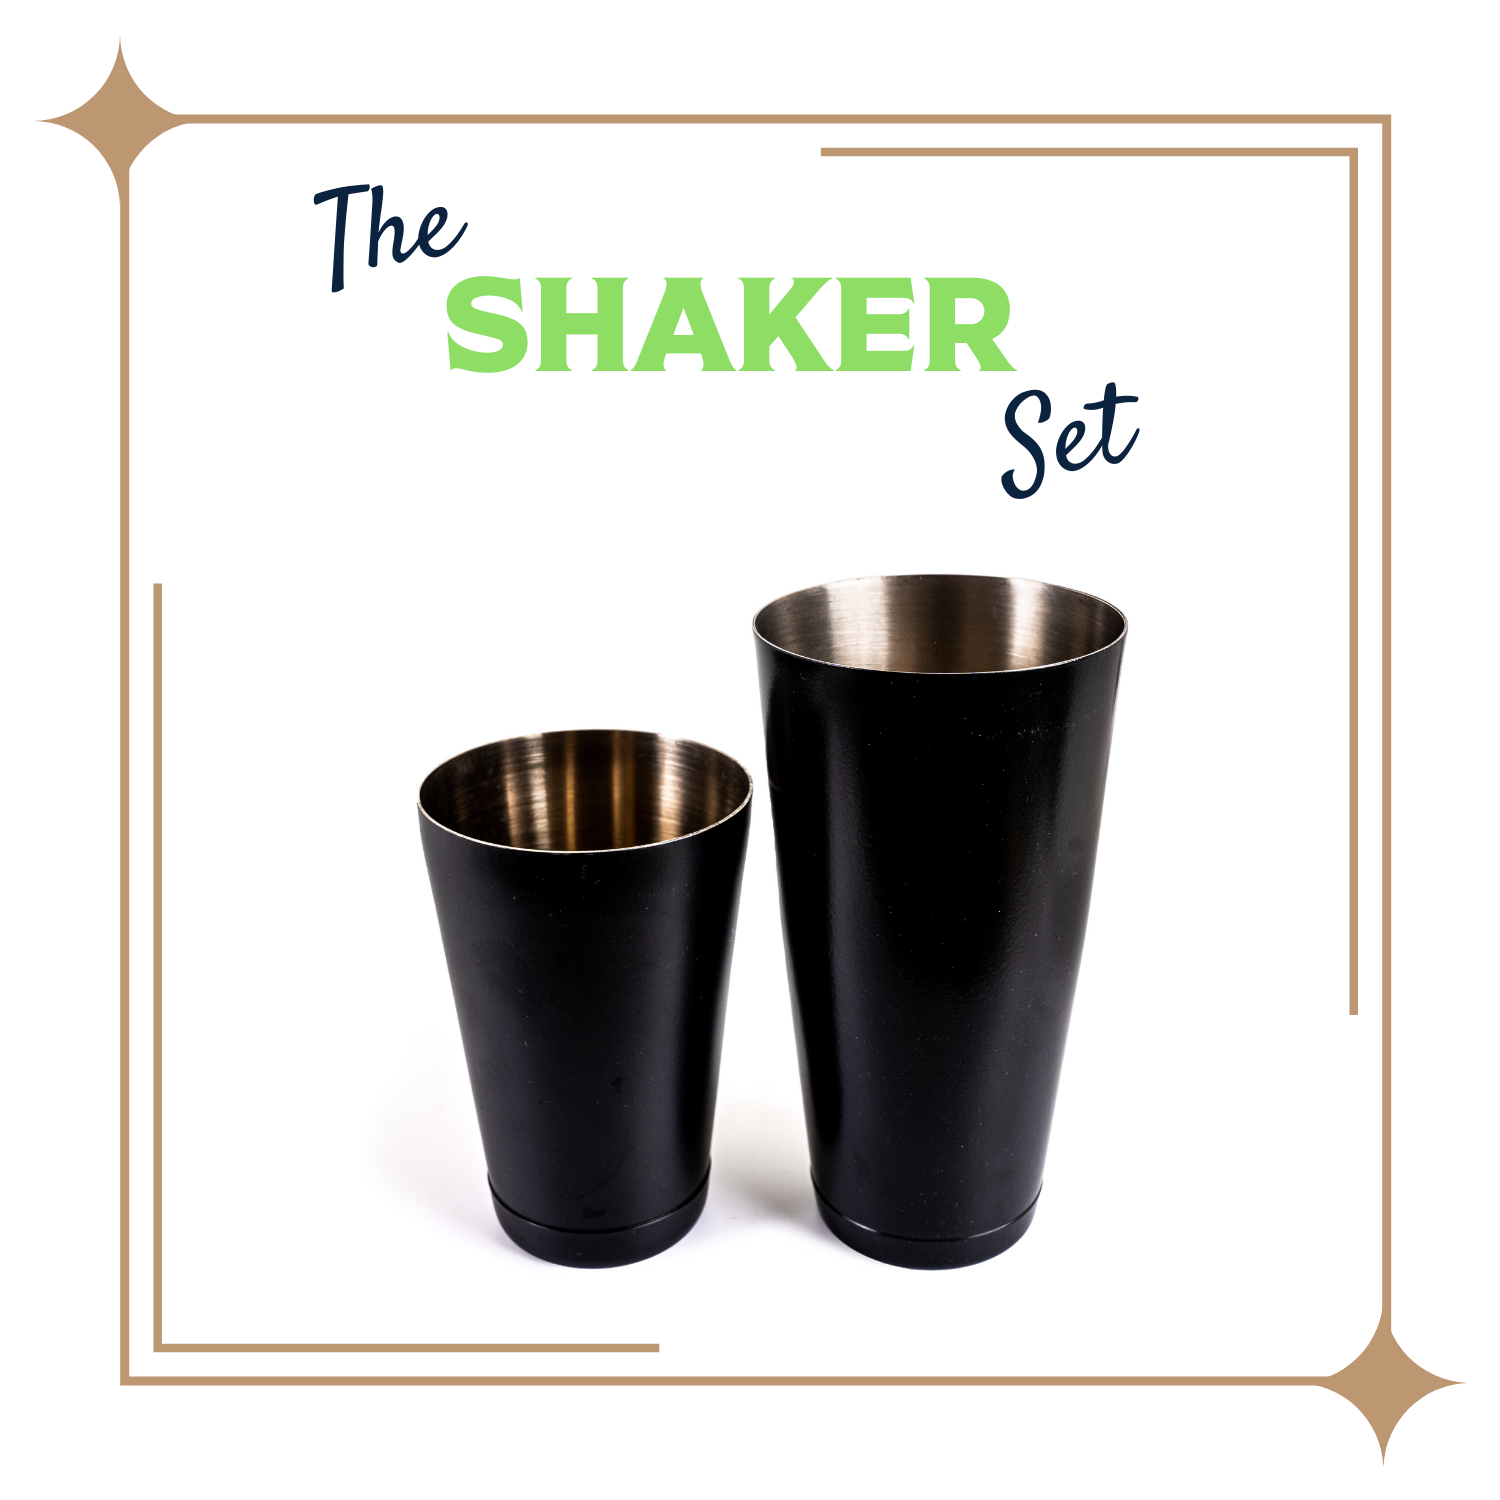 The Shaker Set